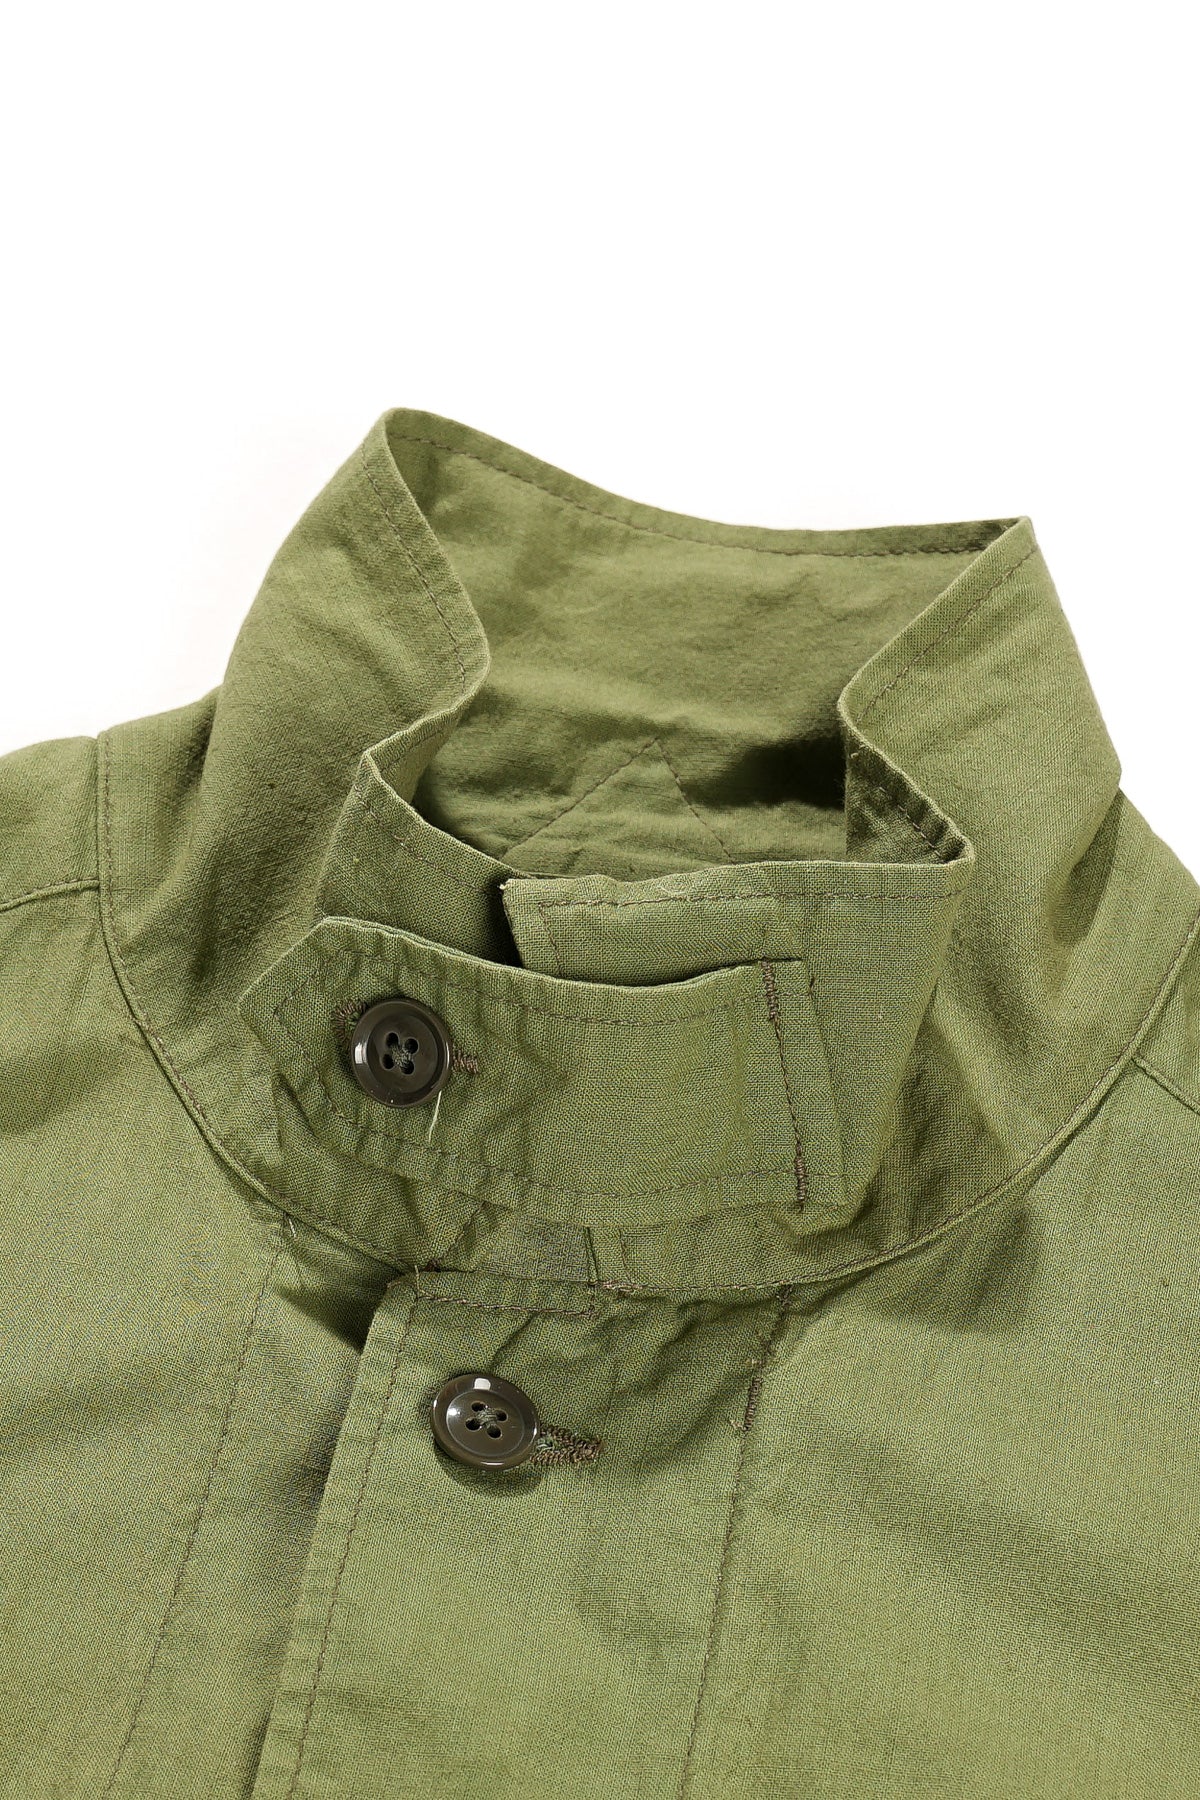 Jungle Fatigue Jacket   Olive Cotton Sheeting